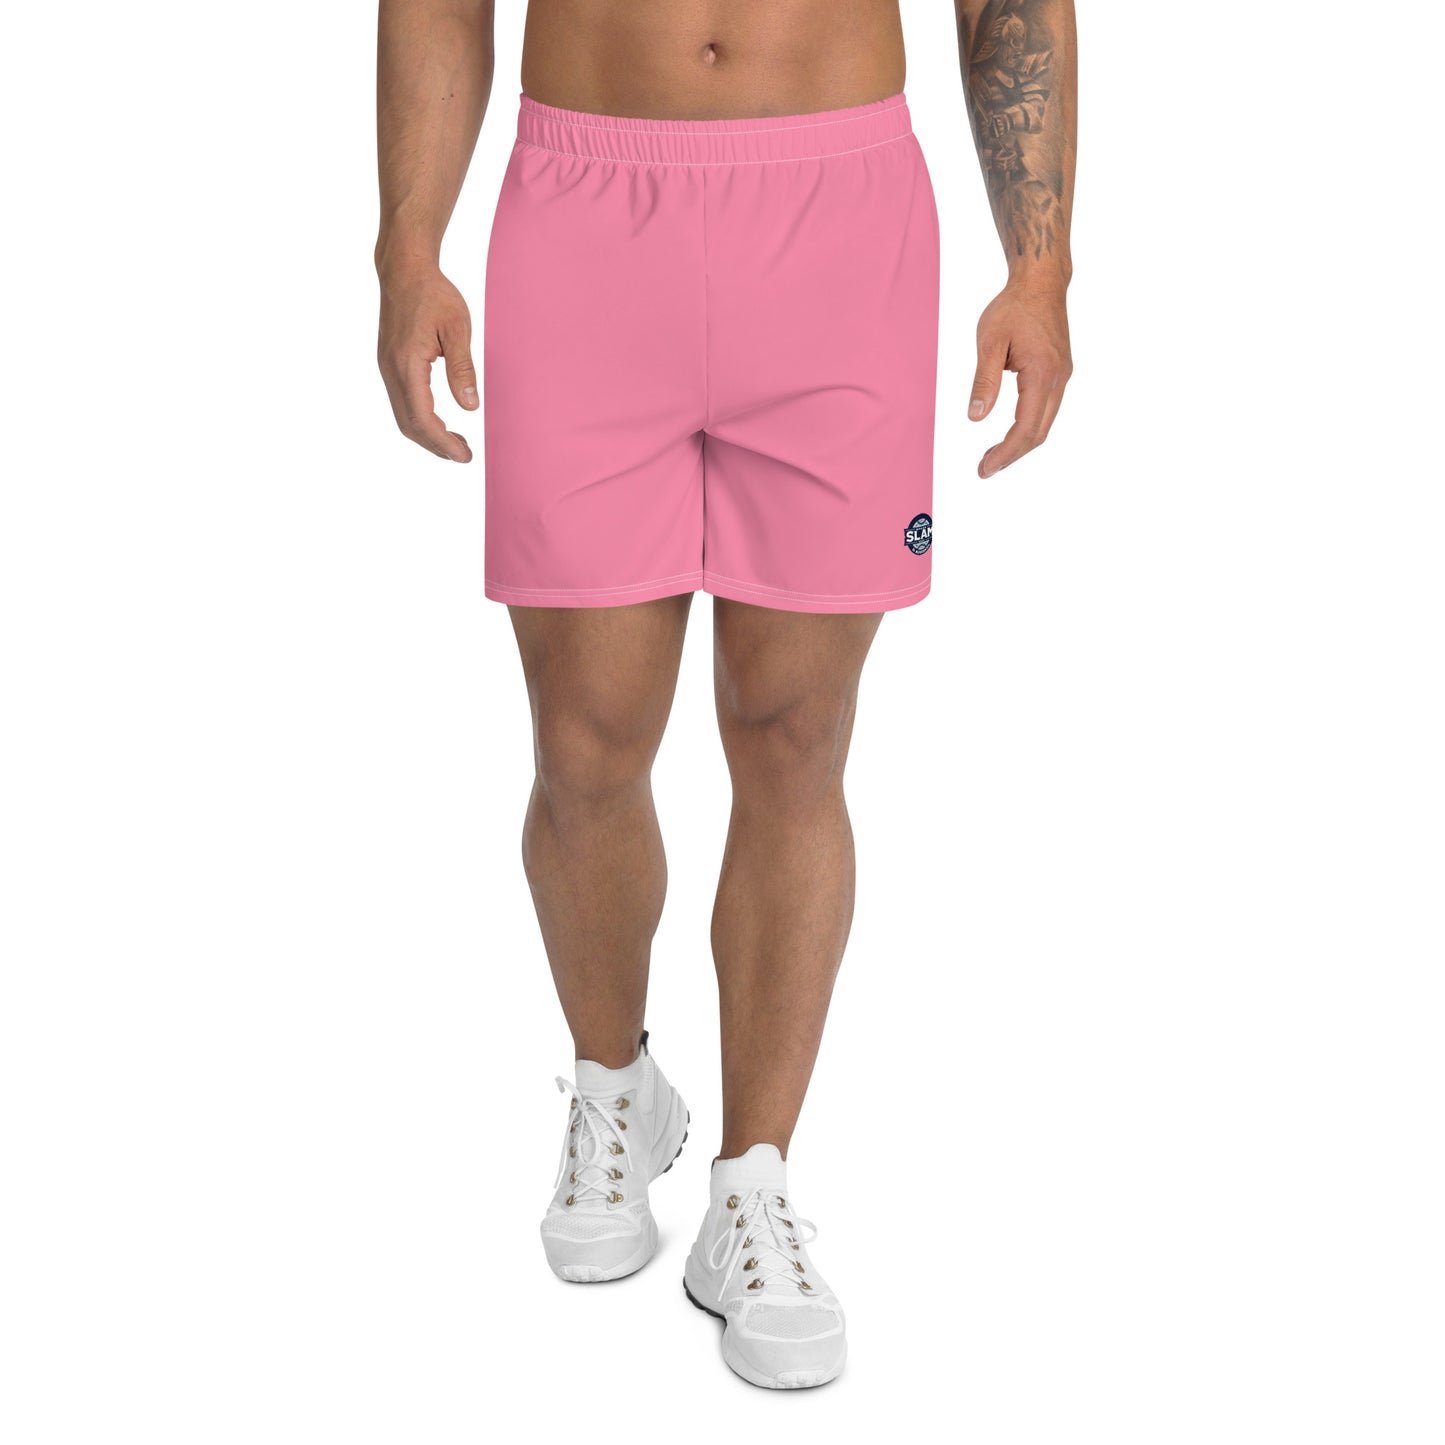 Grand Slam Gear Athletic Shorts- Pink